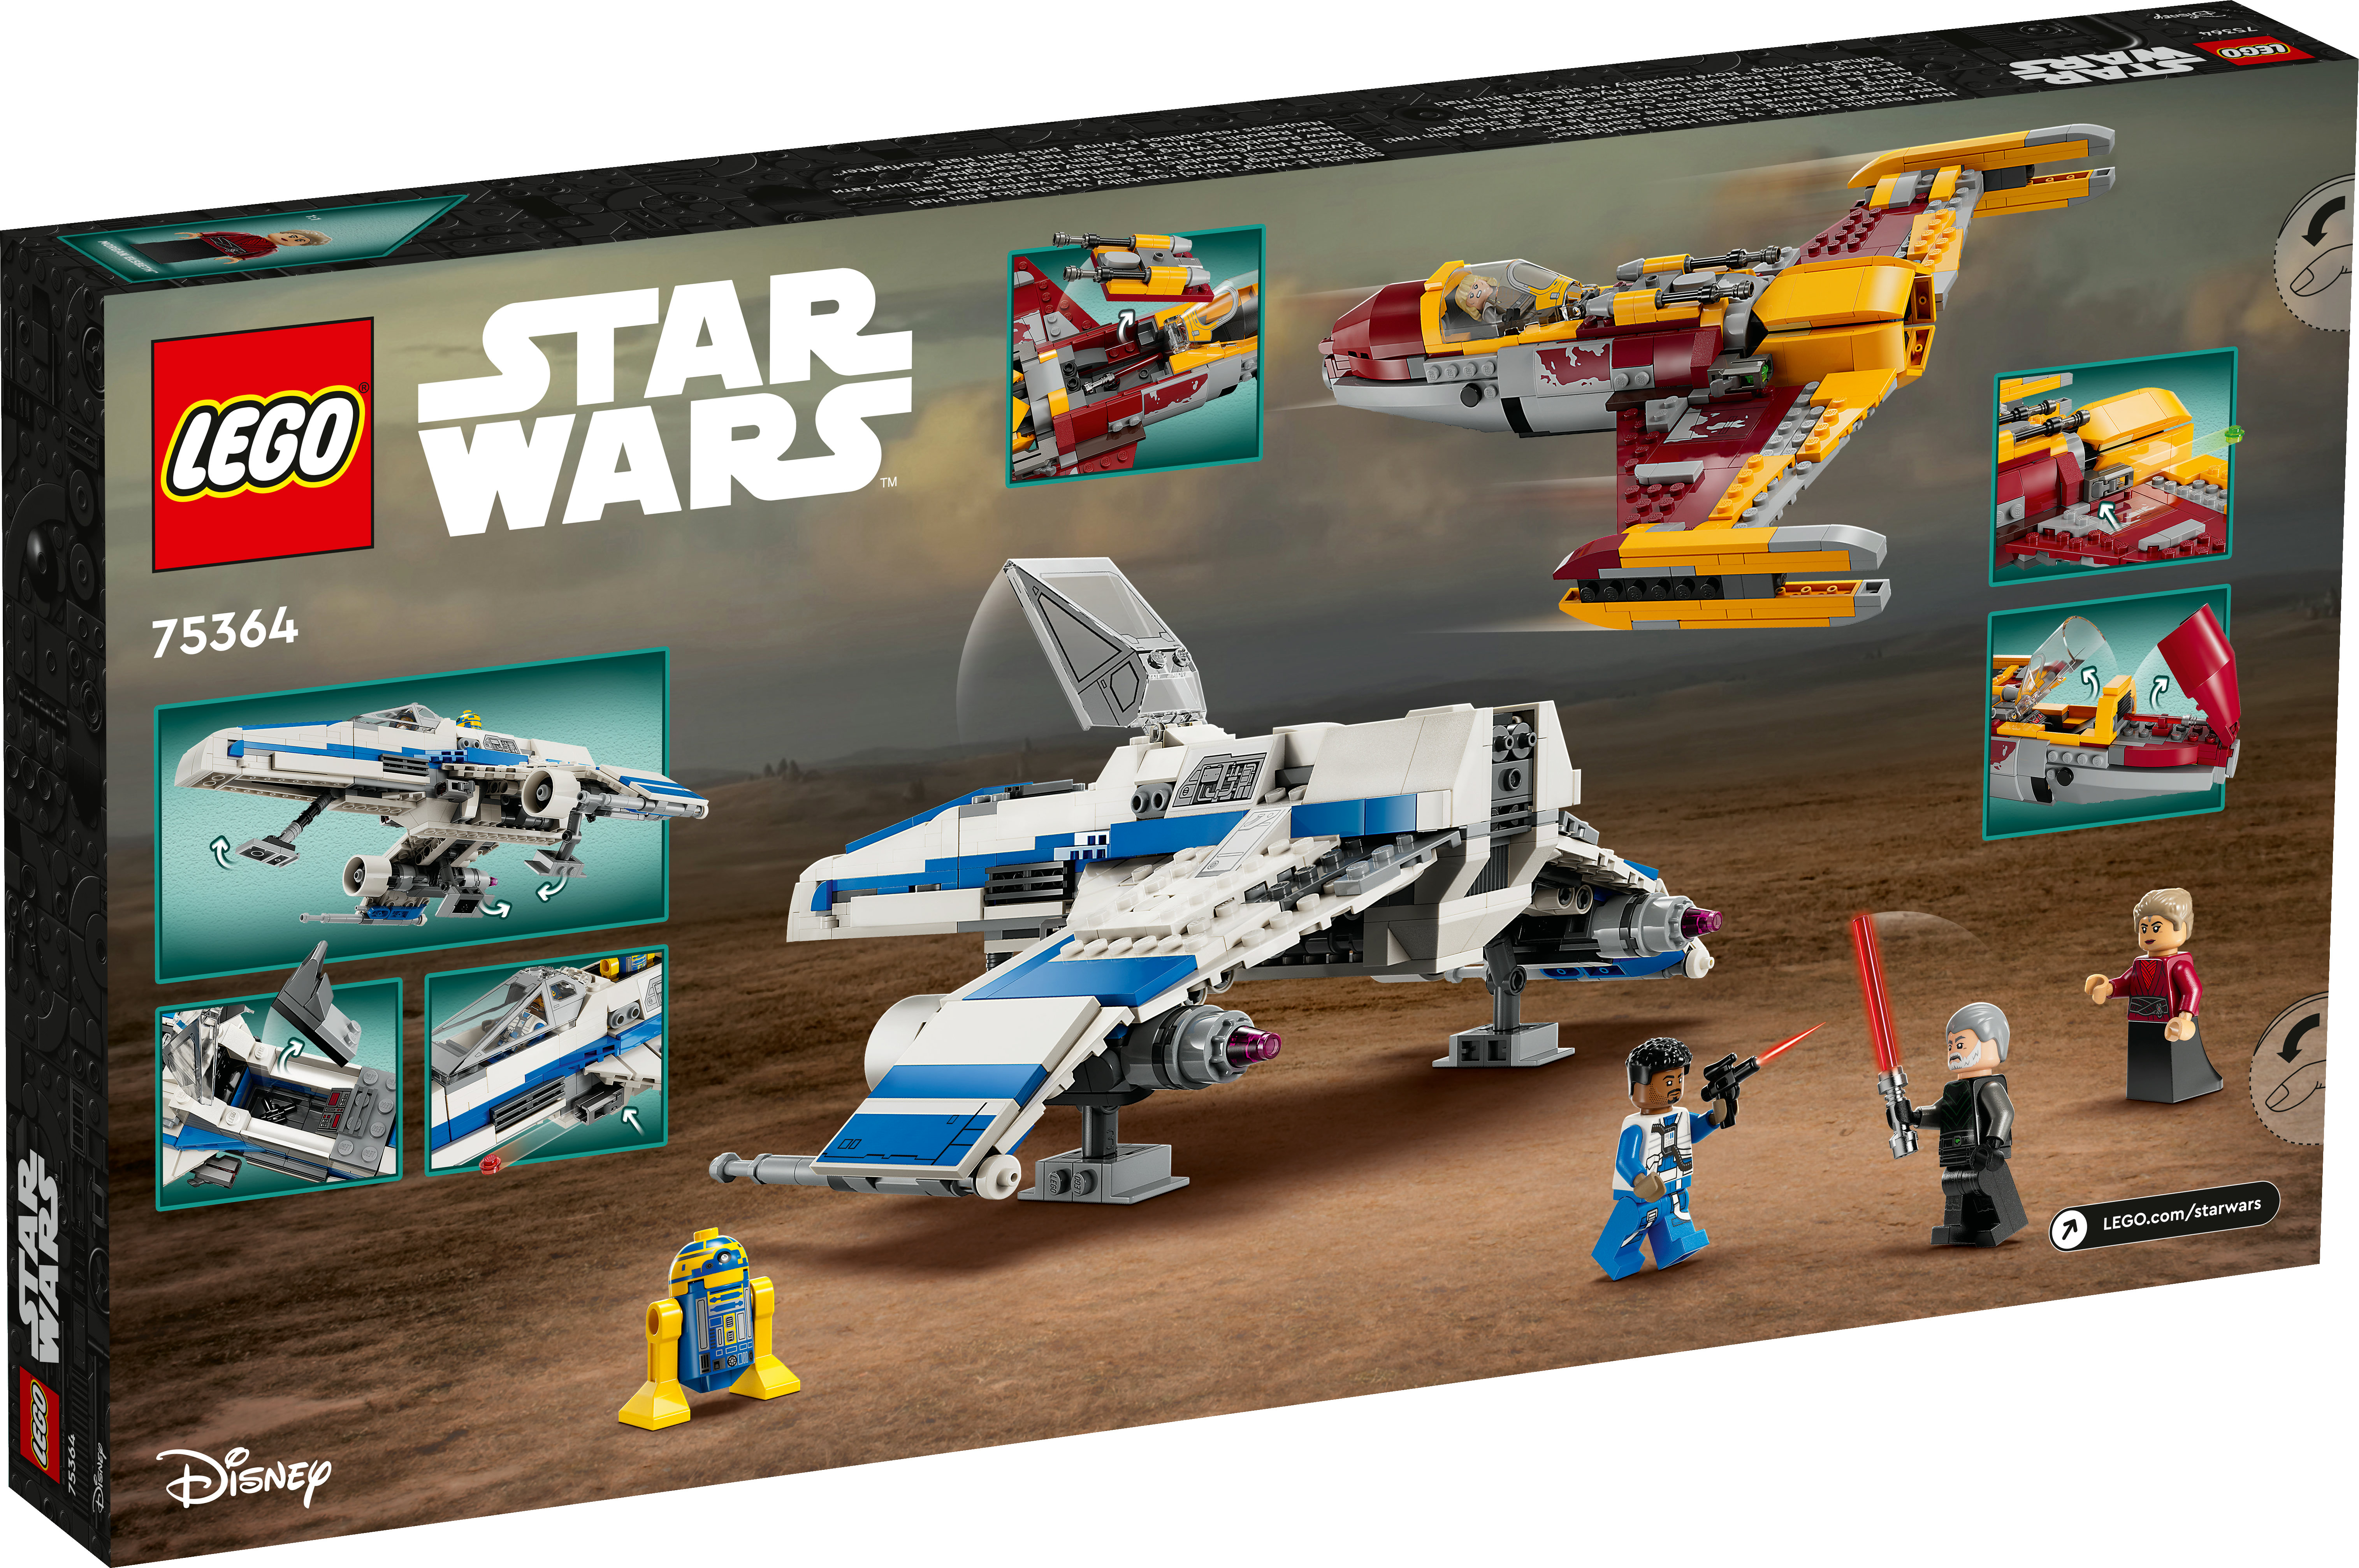 LEGO Star Wars 75364 New Republic E Wing vs Shin Hatis Starfighter